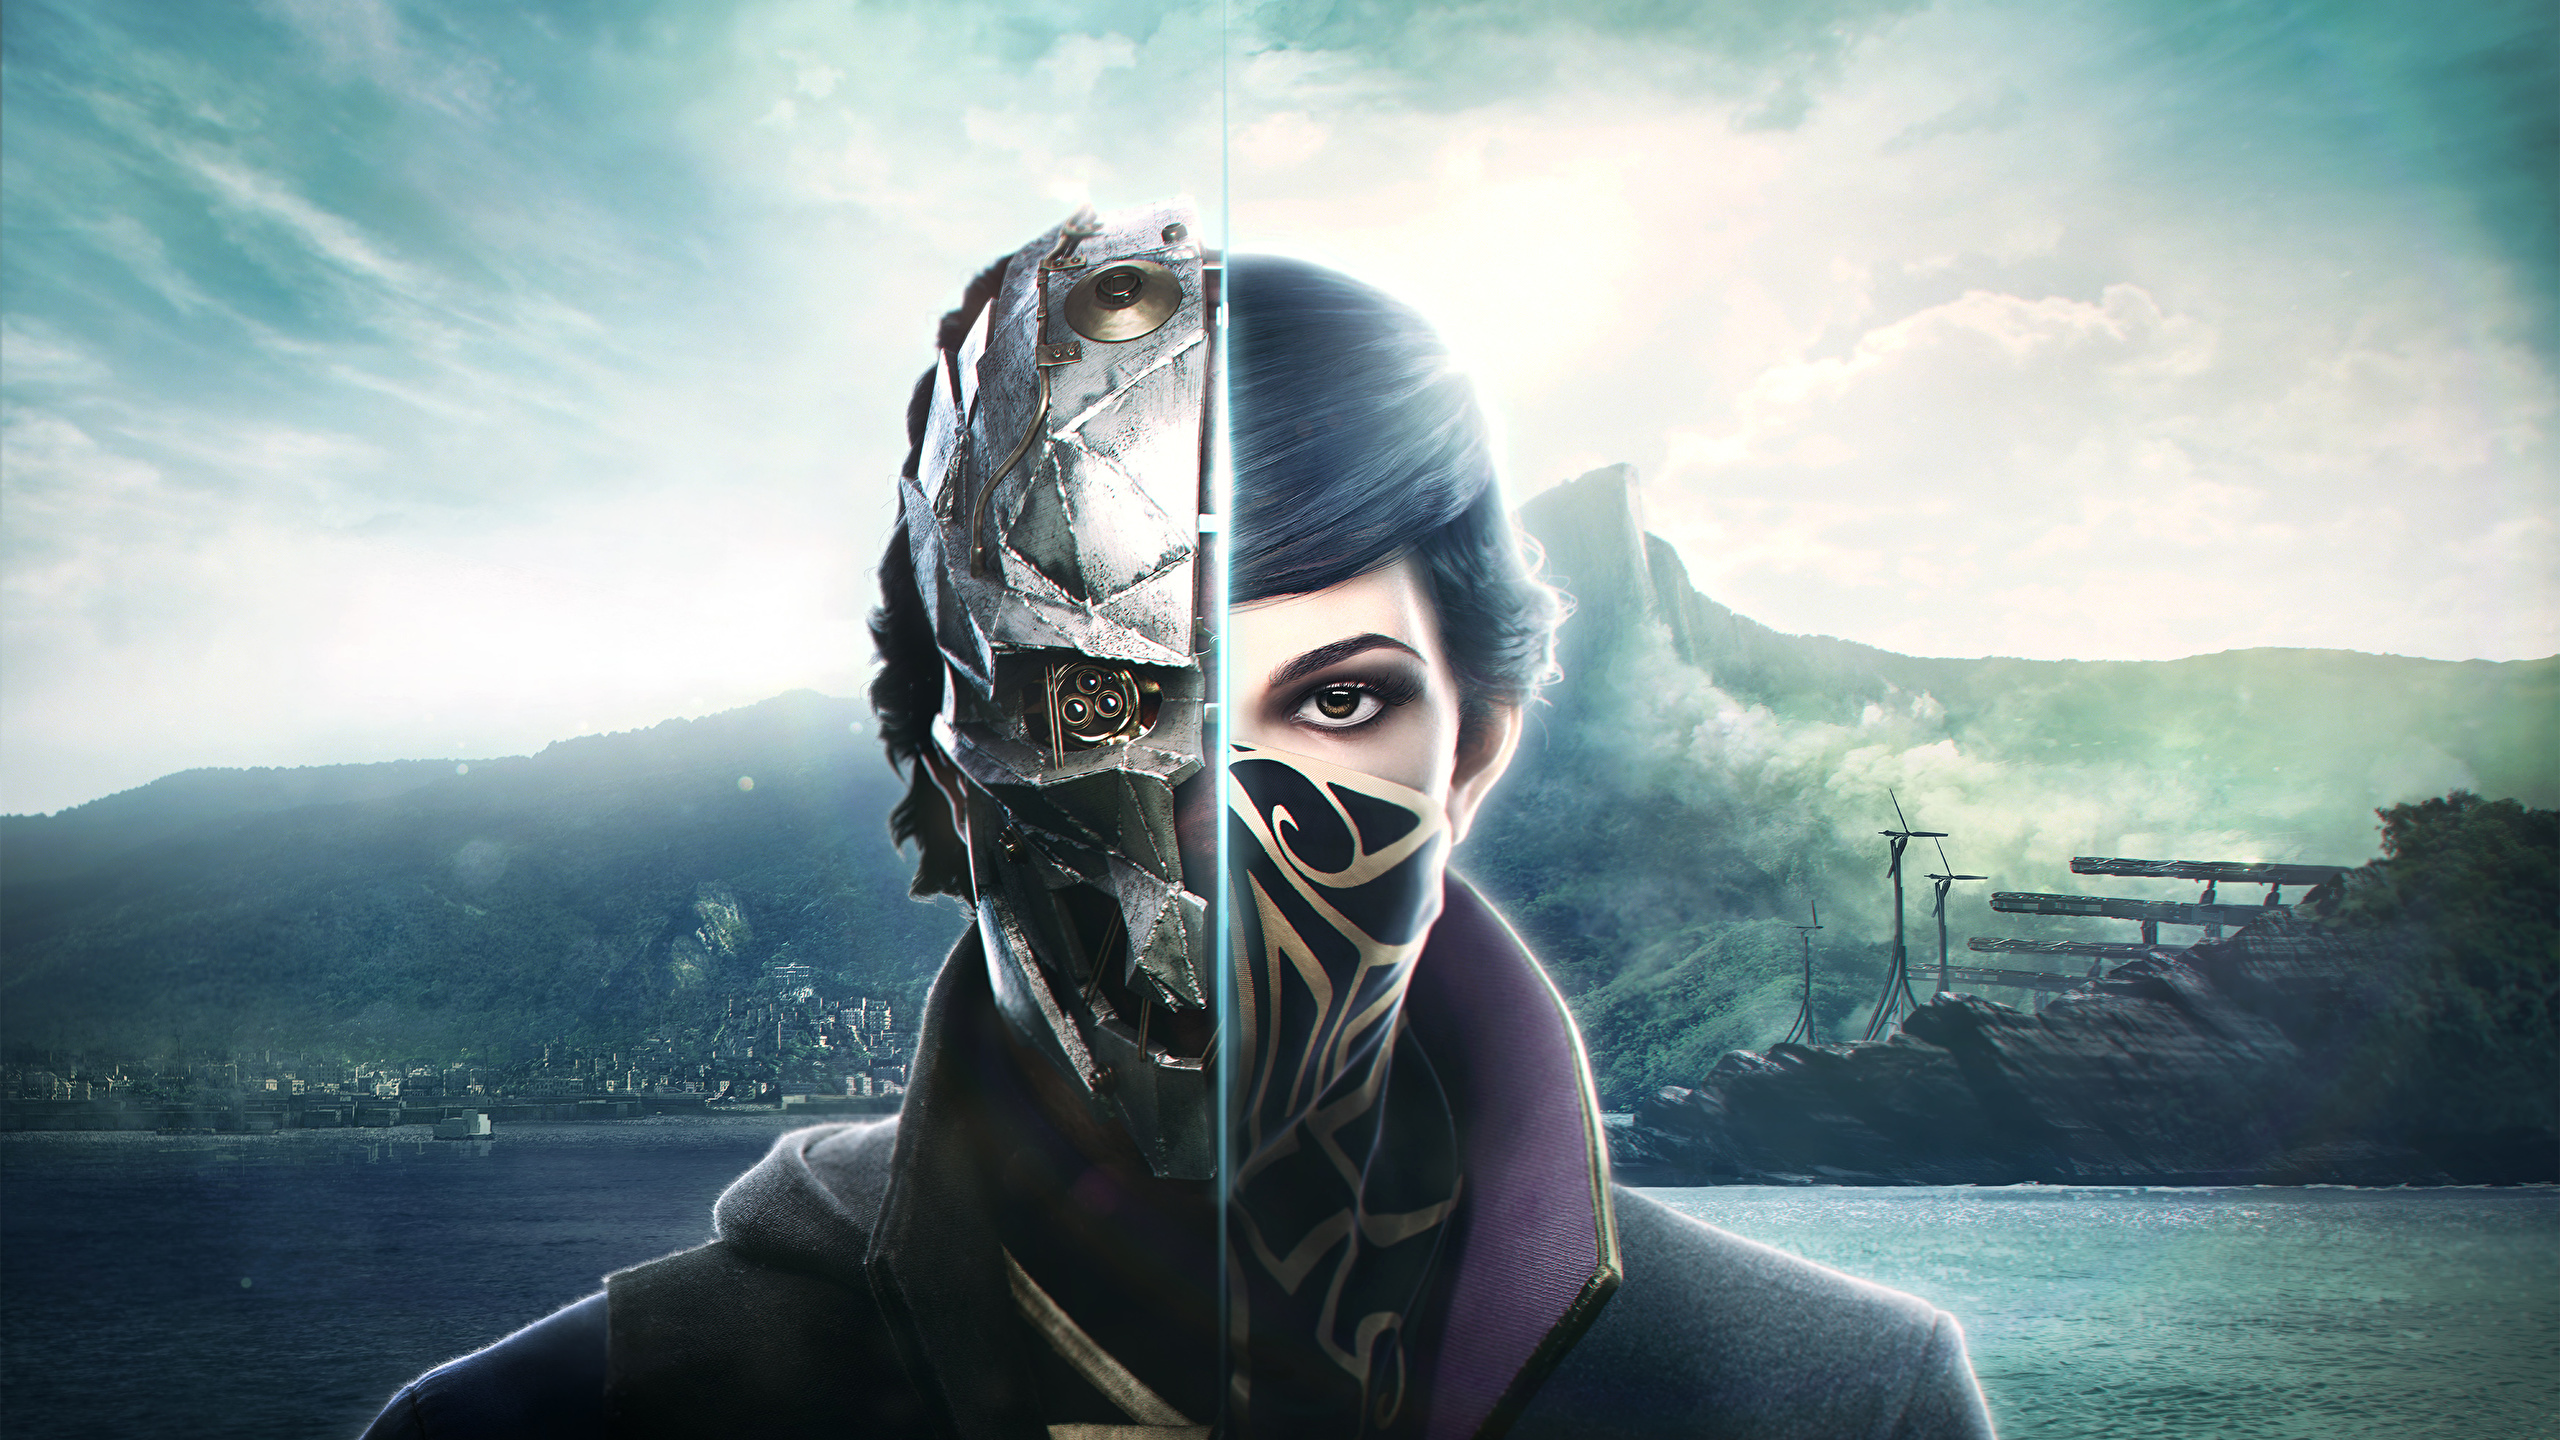 Dishonored Воители 2, Emily Kaldwin Голова Игры фото 2560x1440 компьютерная...